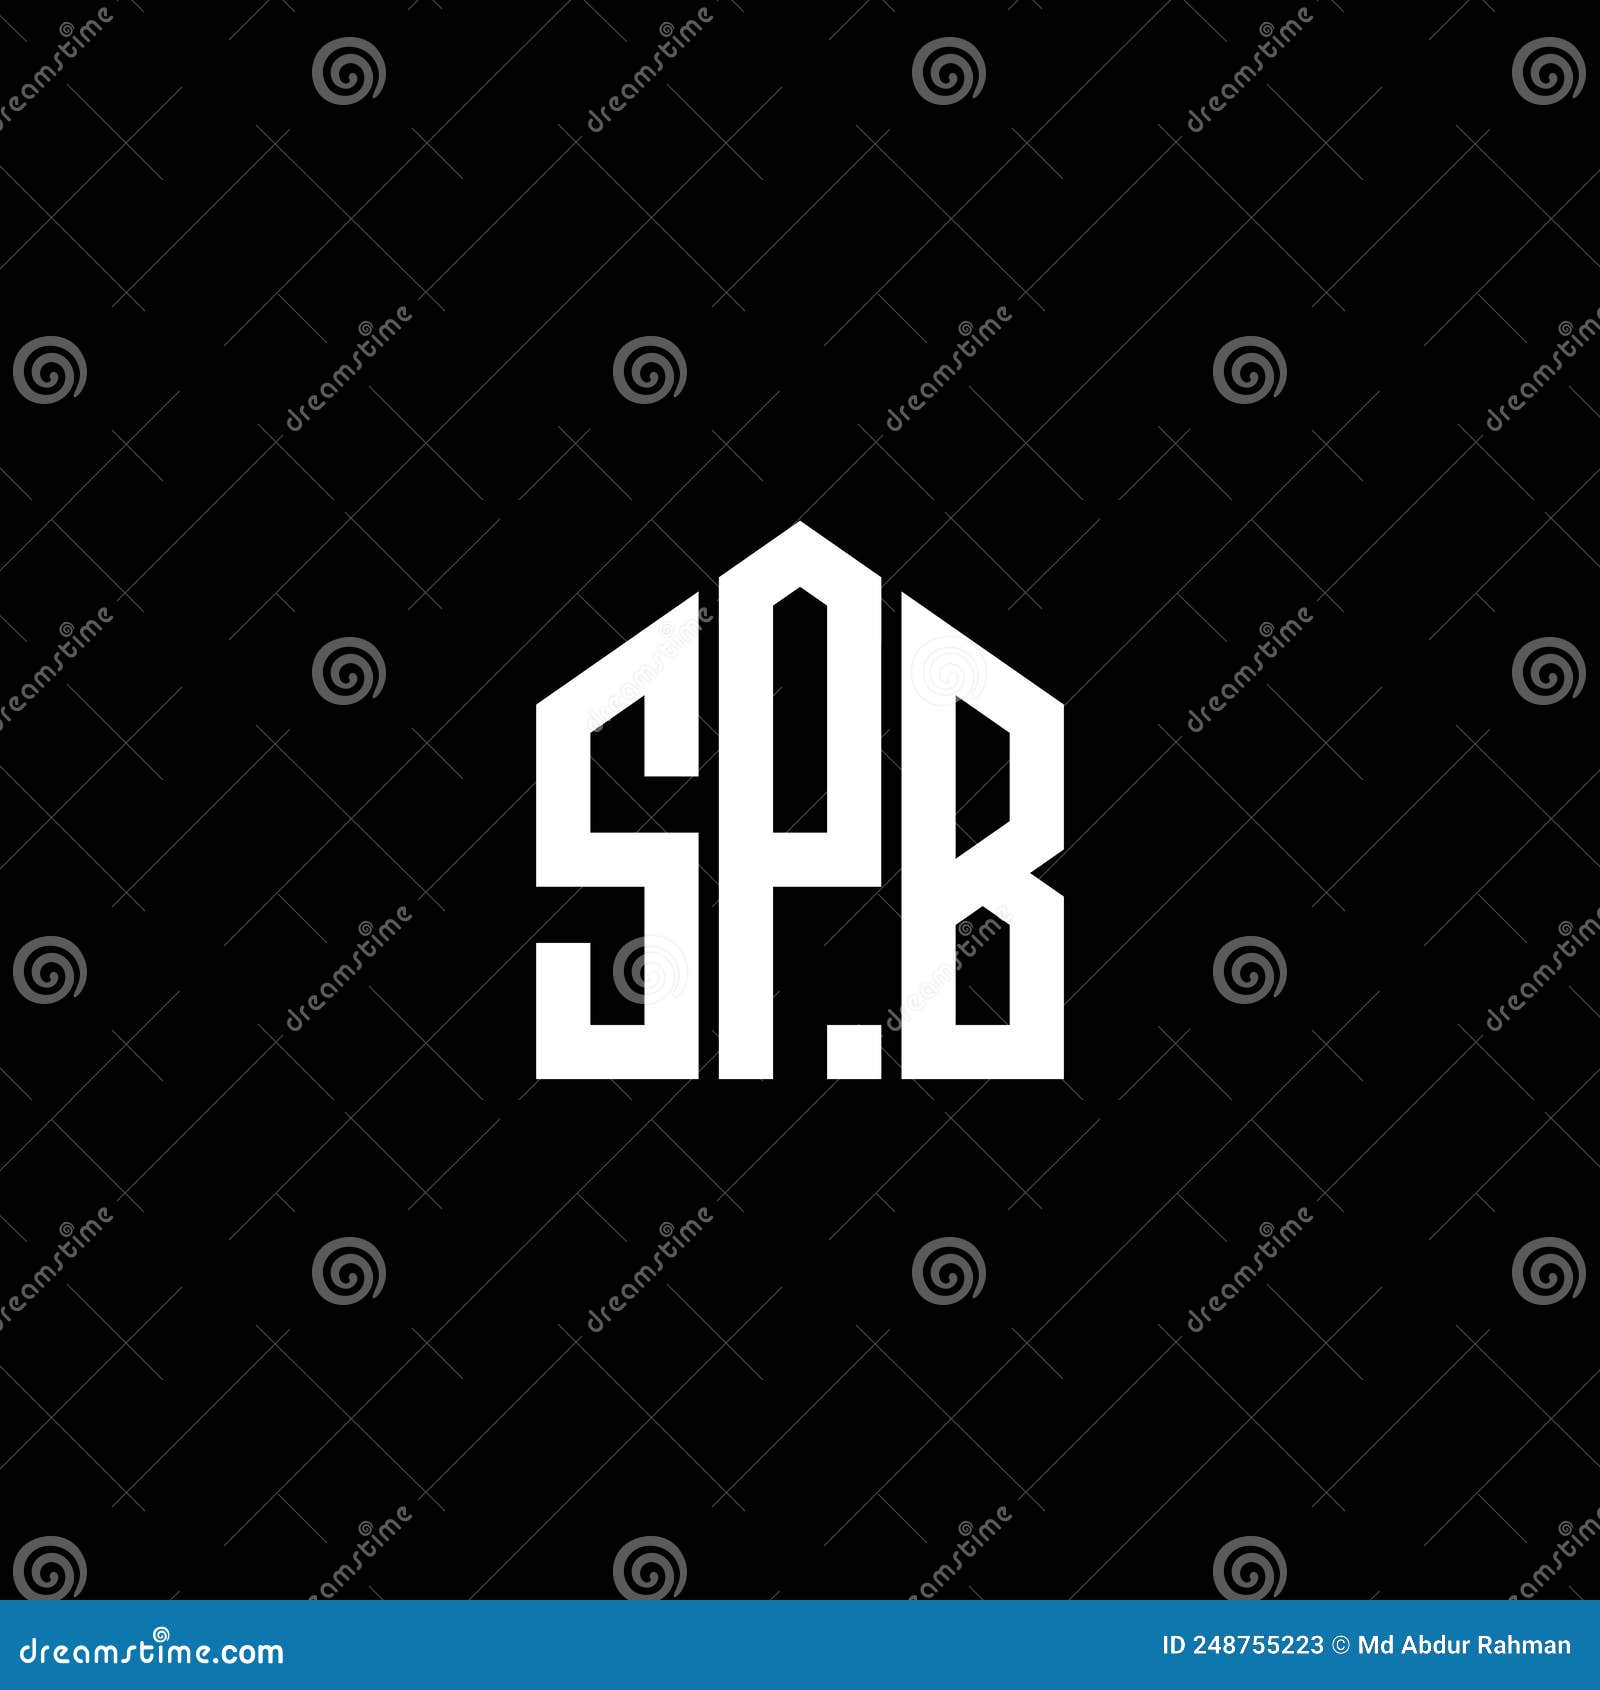 spb letter logo  on black background. spb creative initials letter logo concept. spb letter .spb letter logo  on